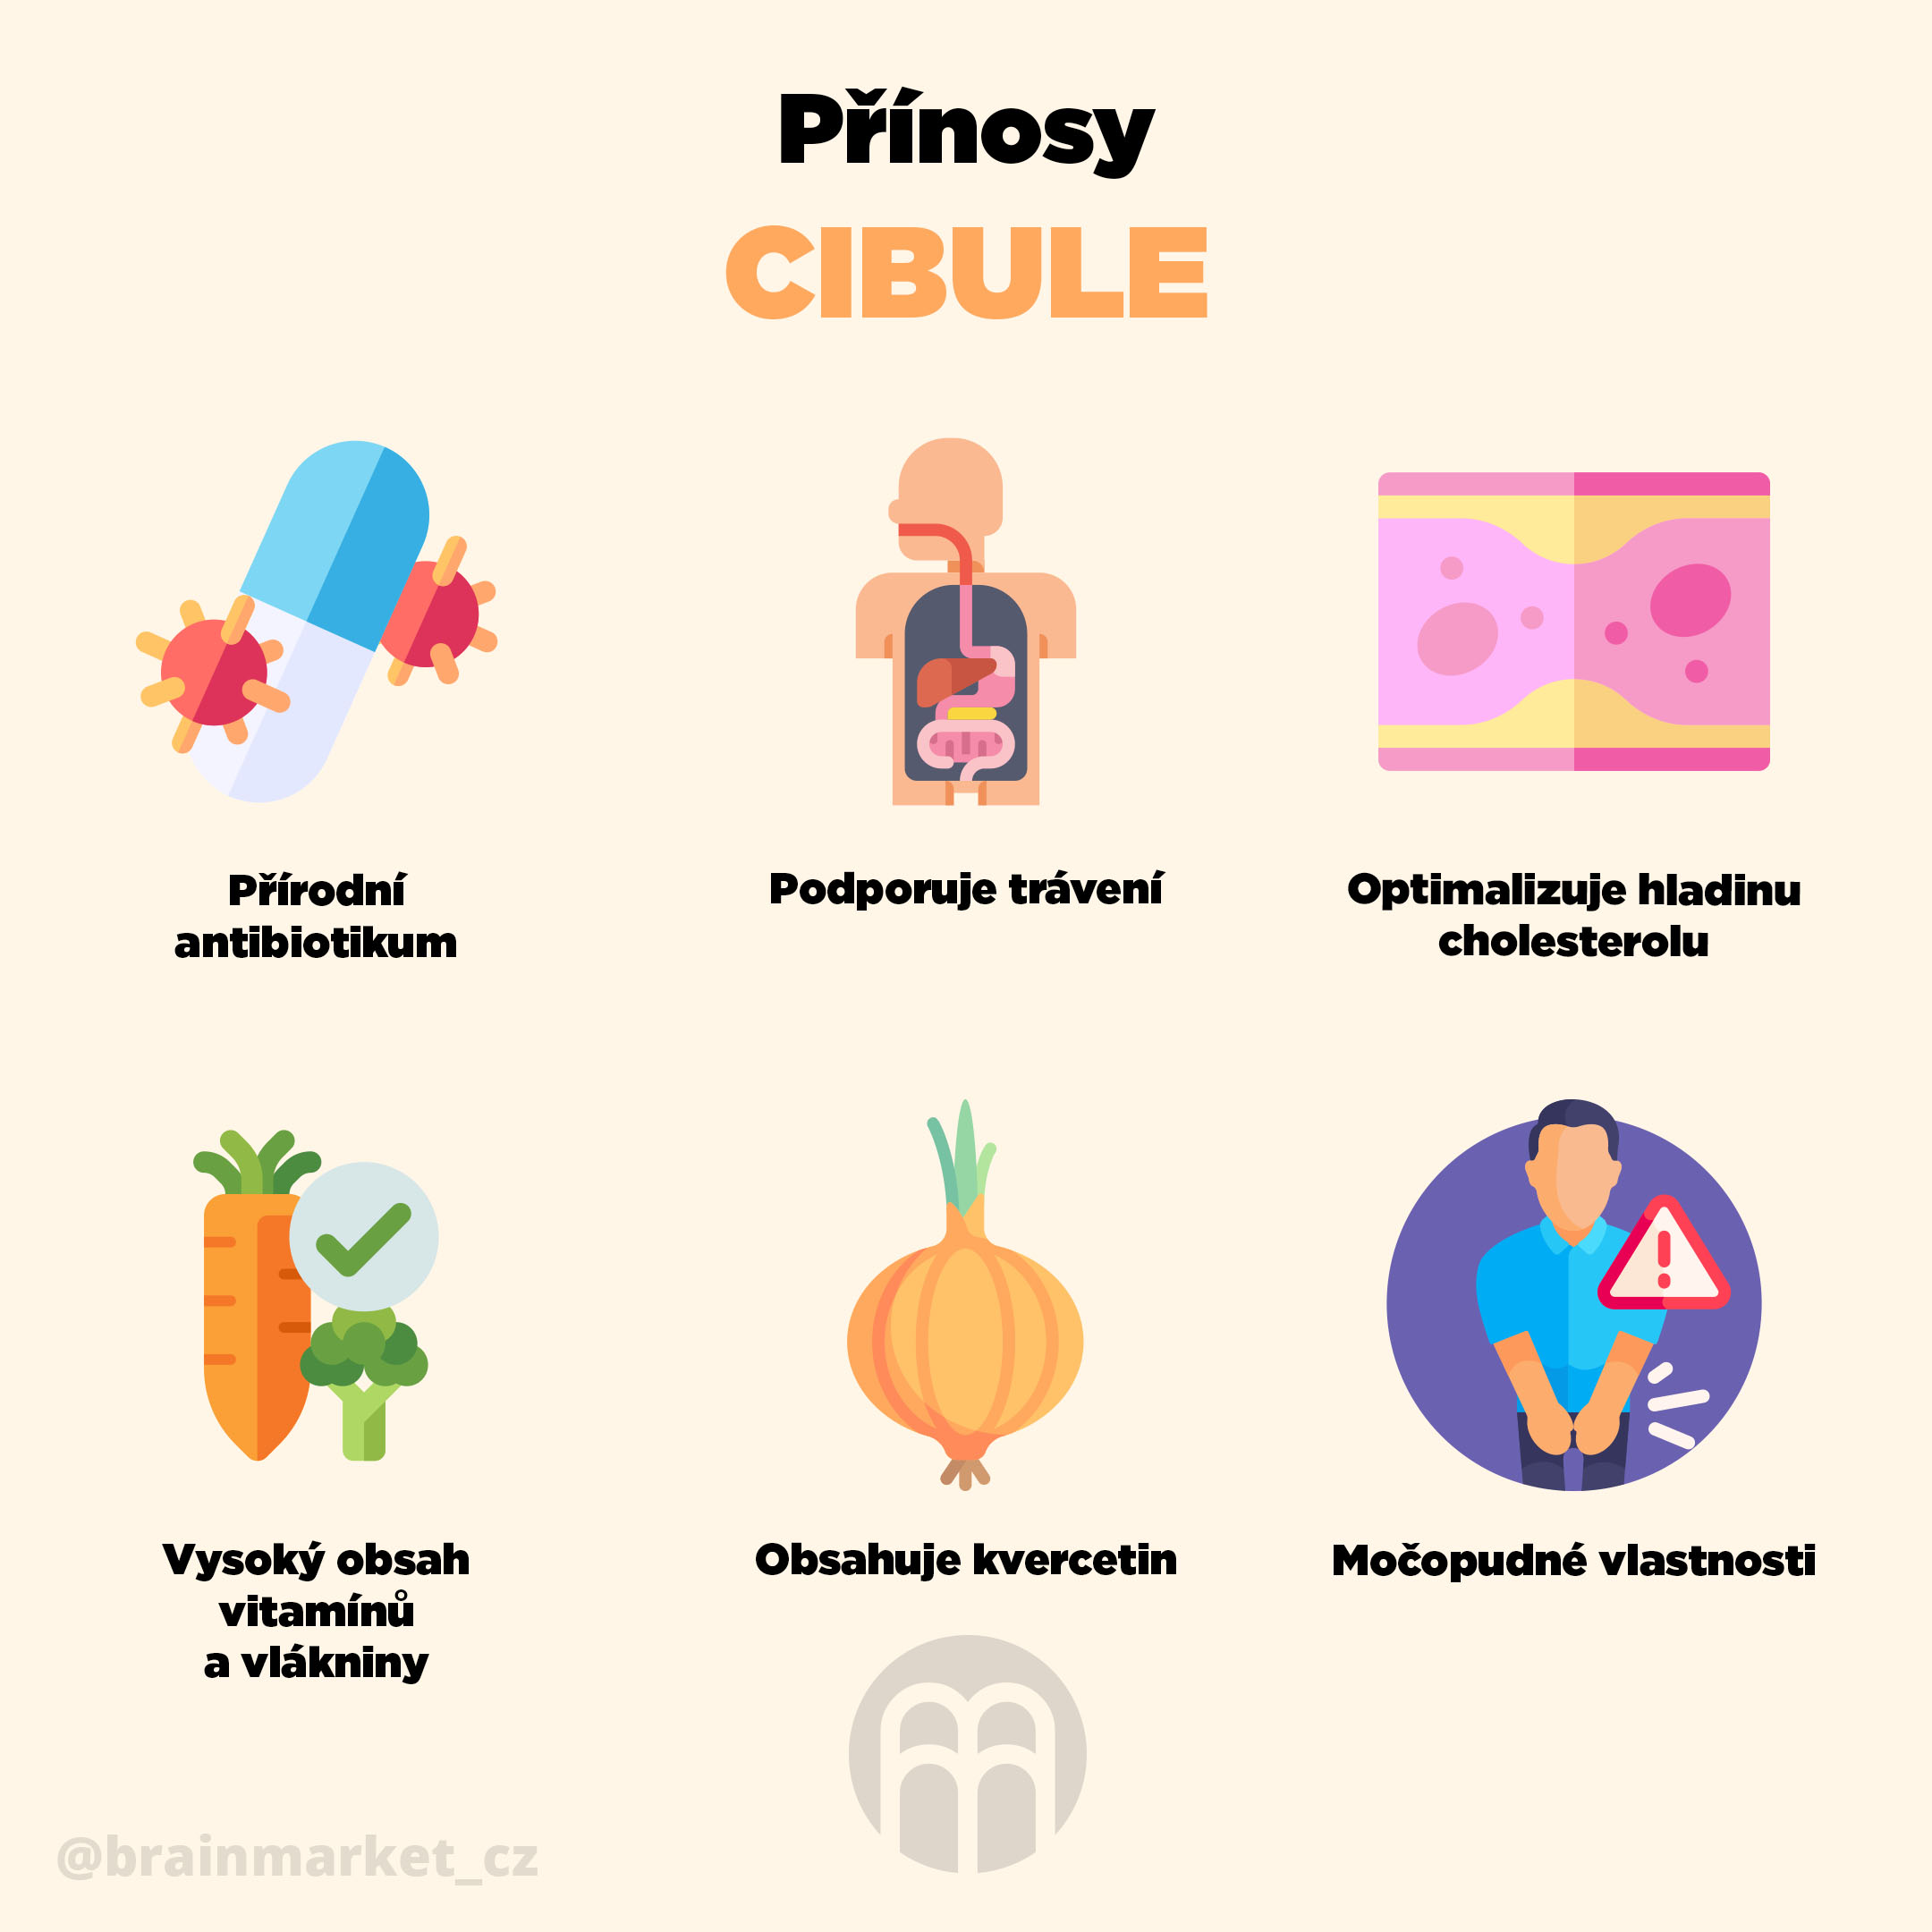 prinosy-cibule-infografika-brainmarket-cz